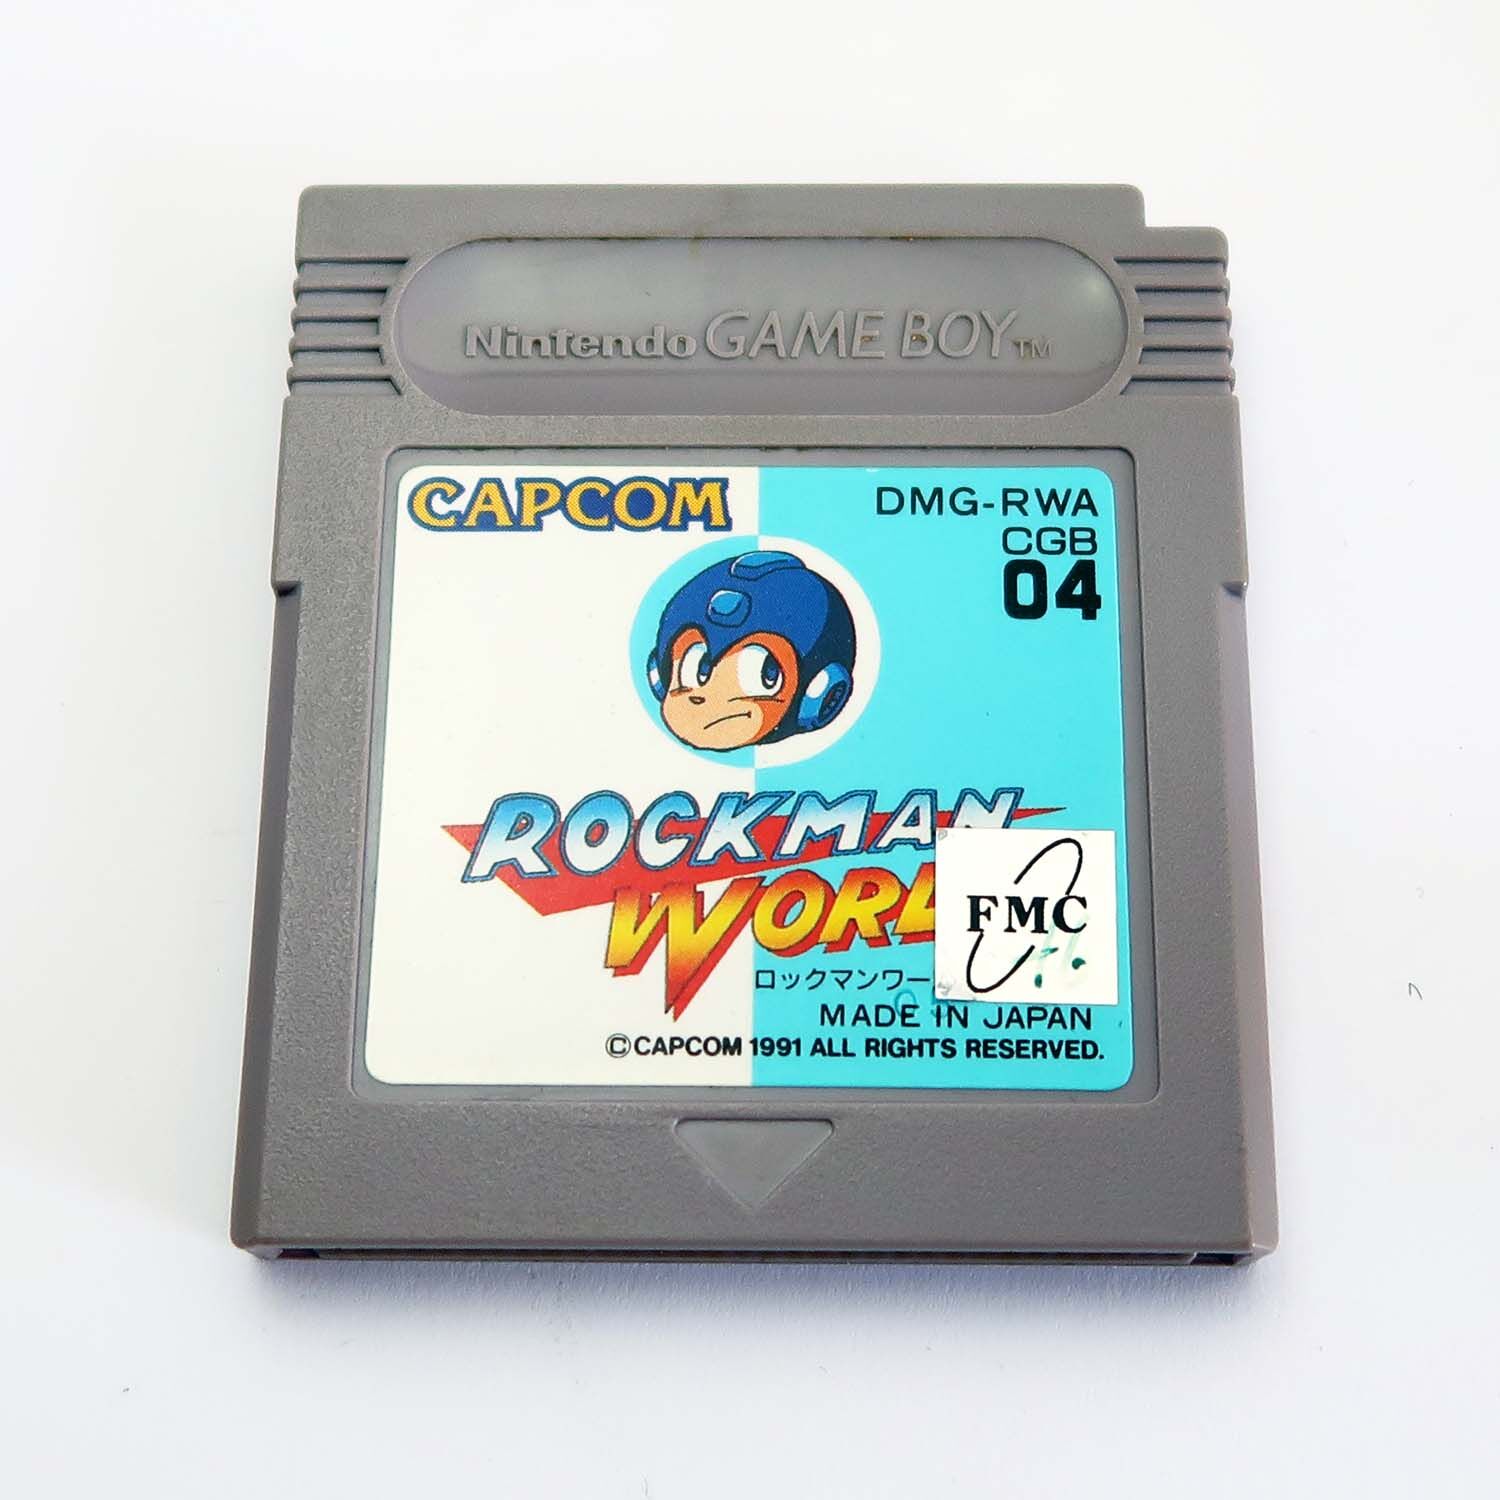 Rockman World - Game Boy